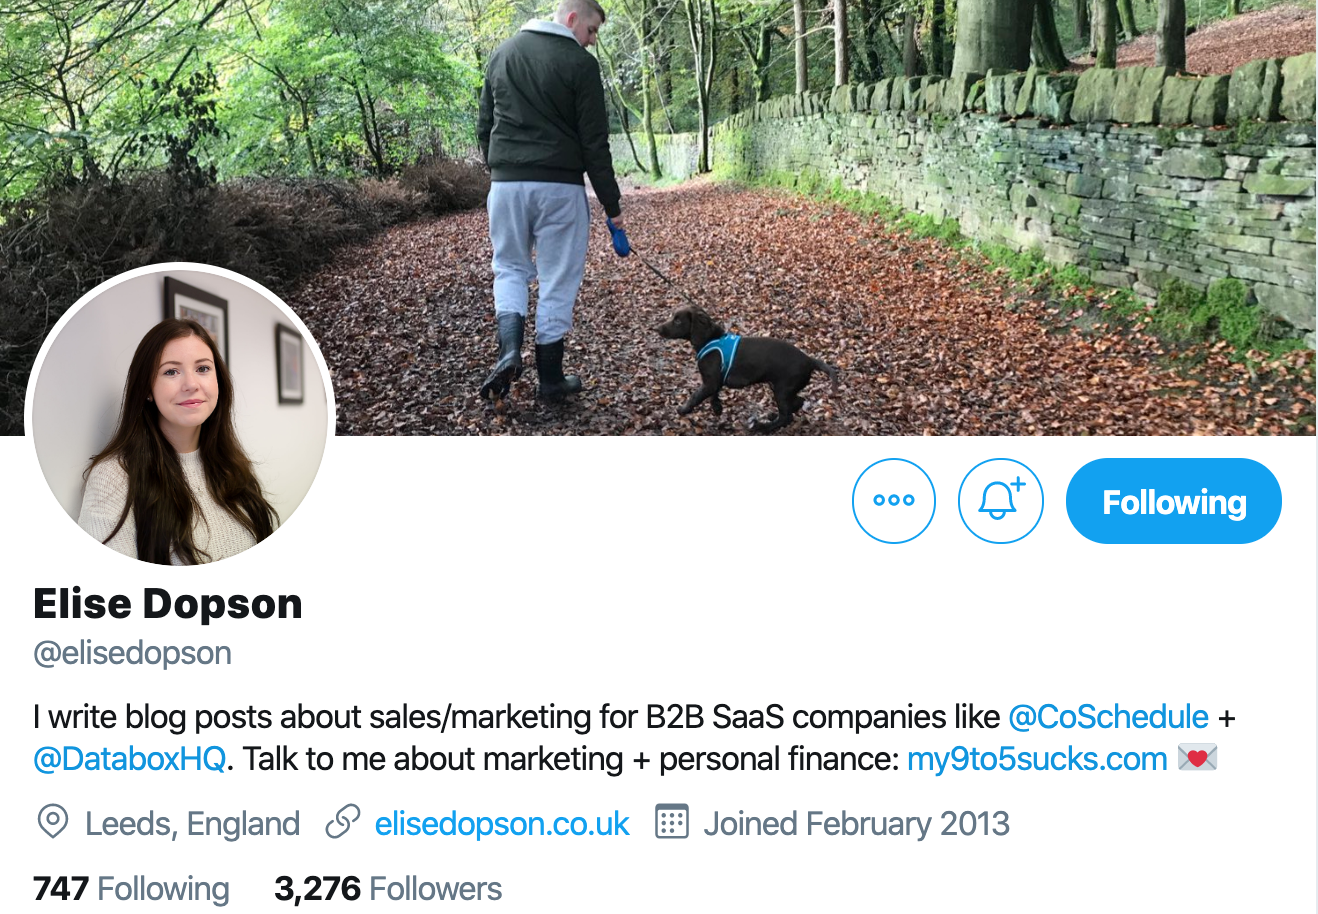 Elise Dopson. SaaS marketing expert on twitter